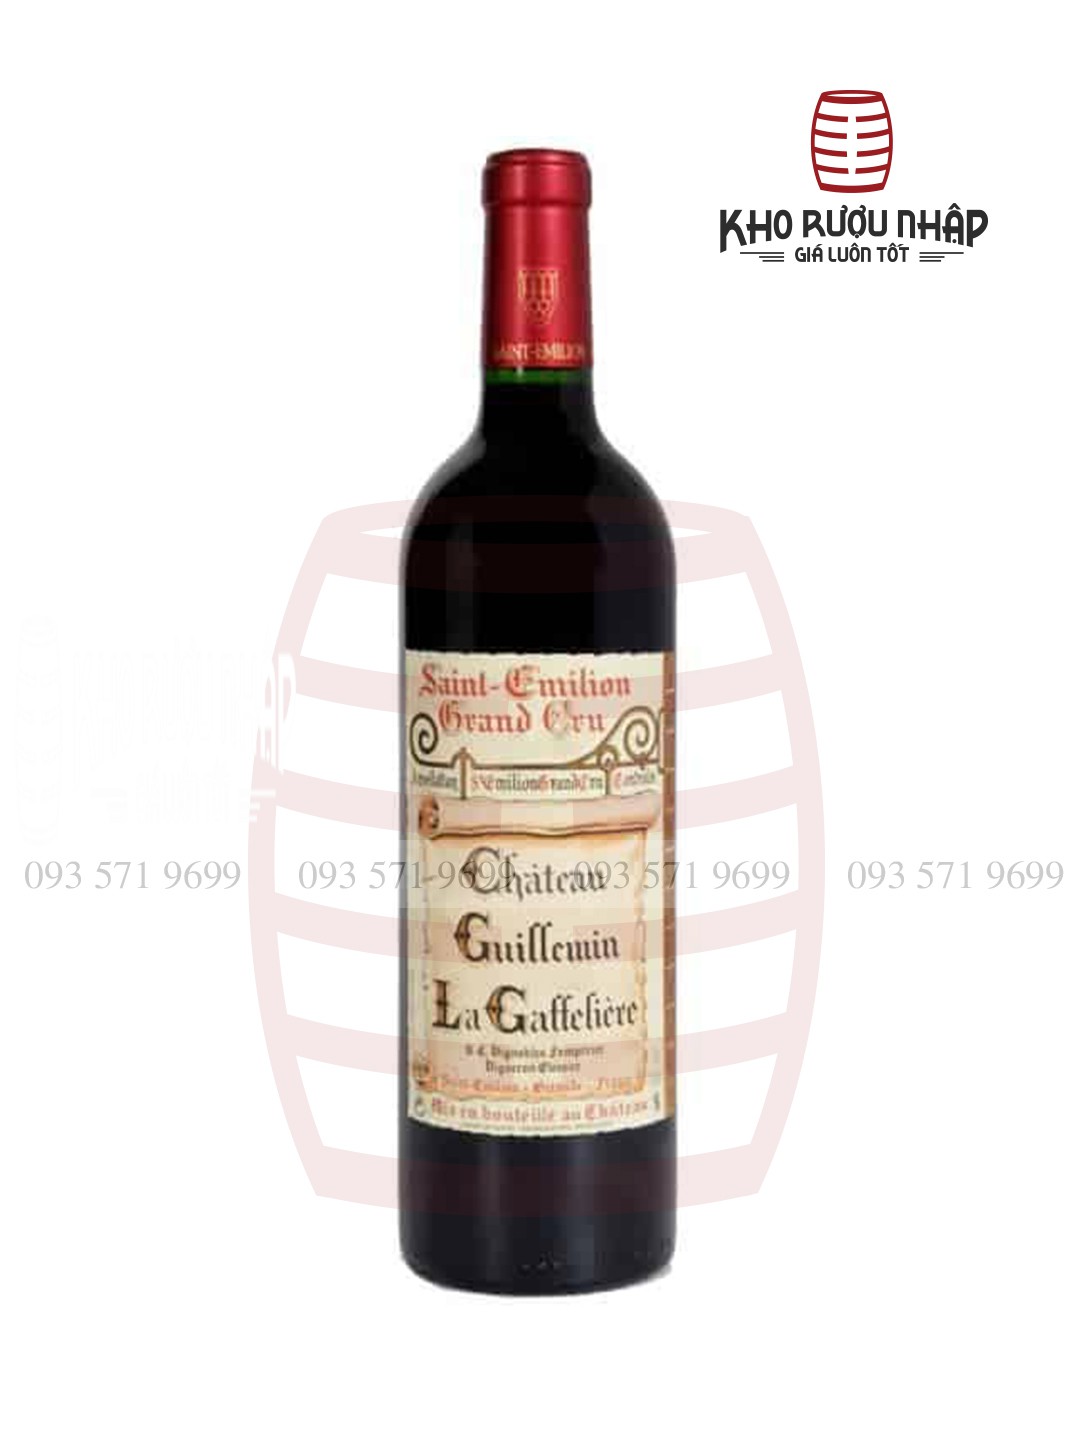 Rượu vang Pháp Chateau Guillemin 2011 La Gaffeliere Grand Cru – BW – 01550